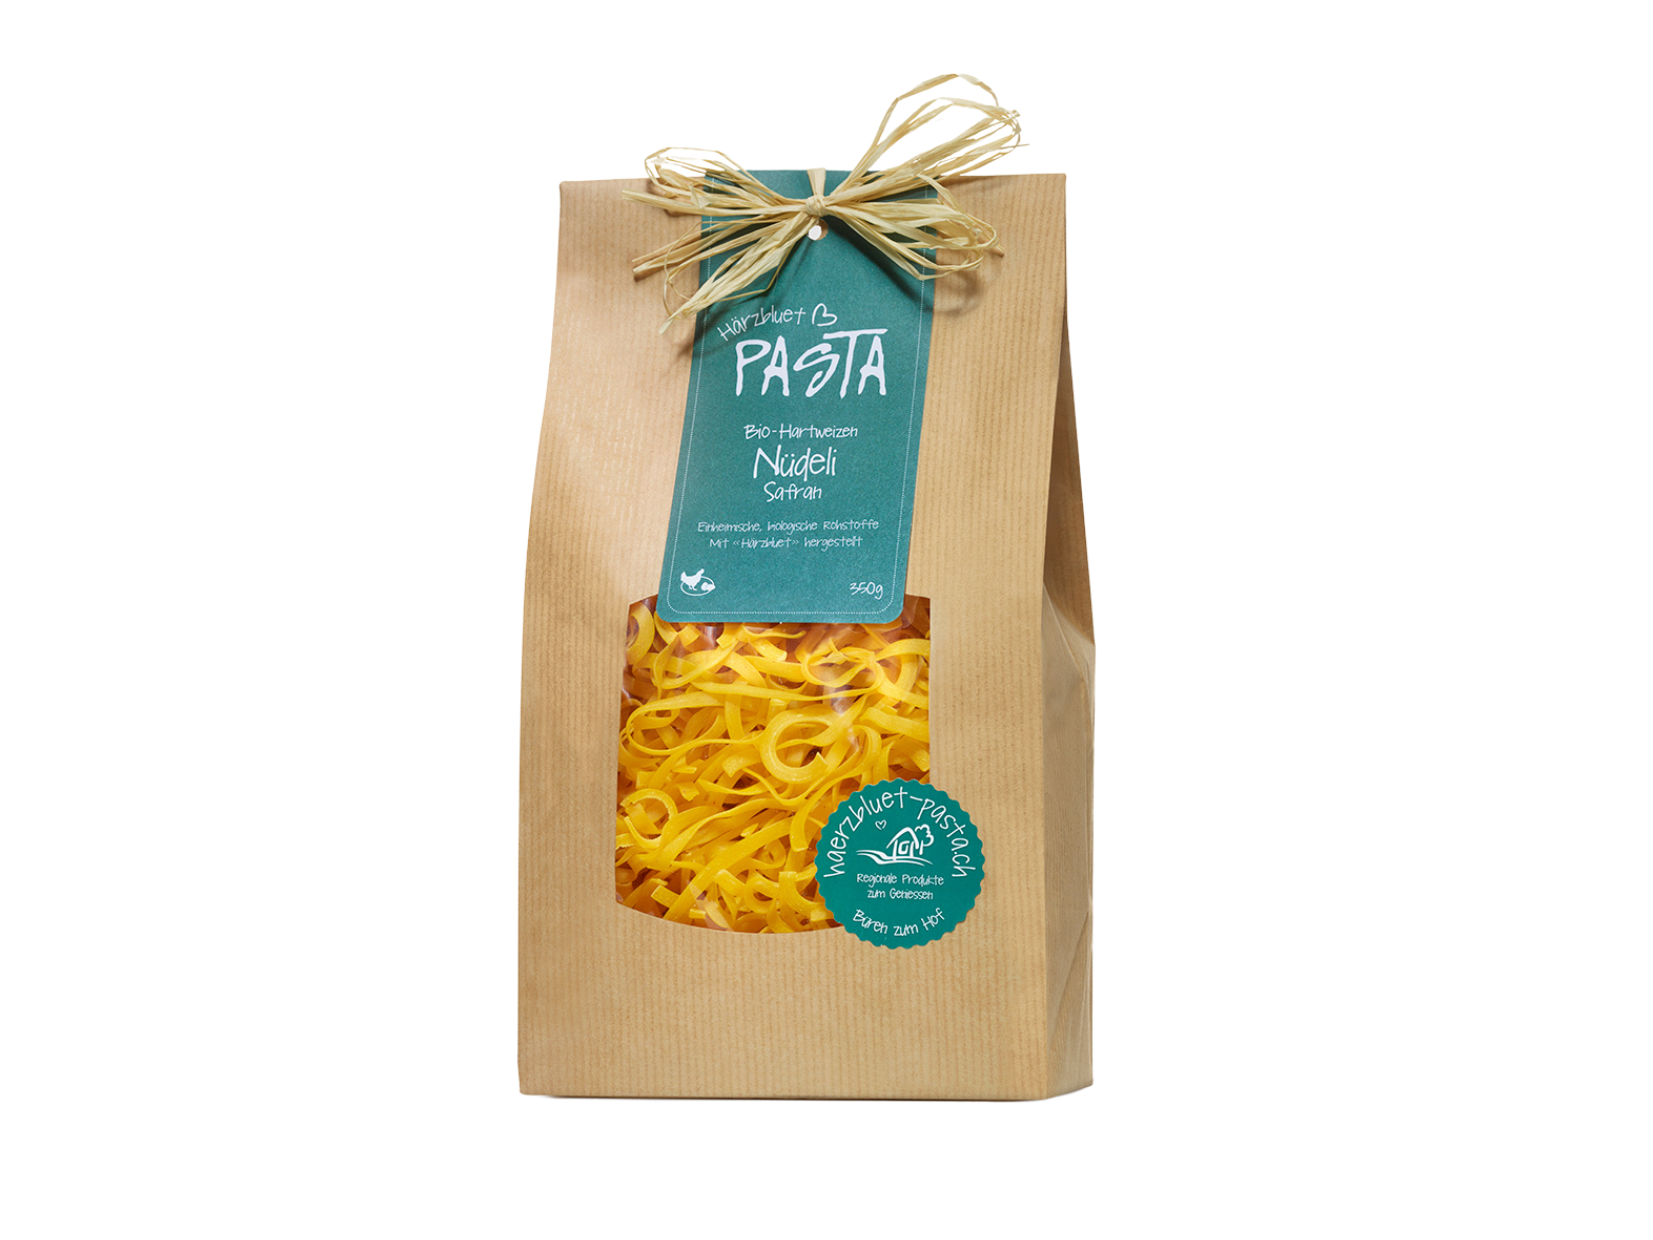 Organic durum wheat noodles saffron (350g), artisanal product for direct sale in Switzerland